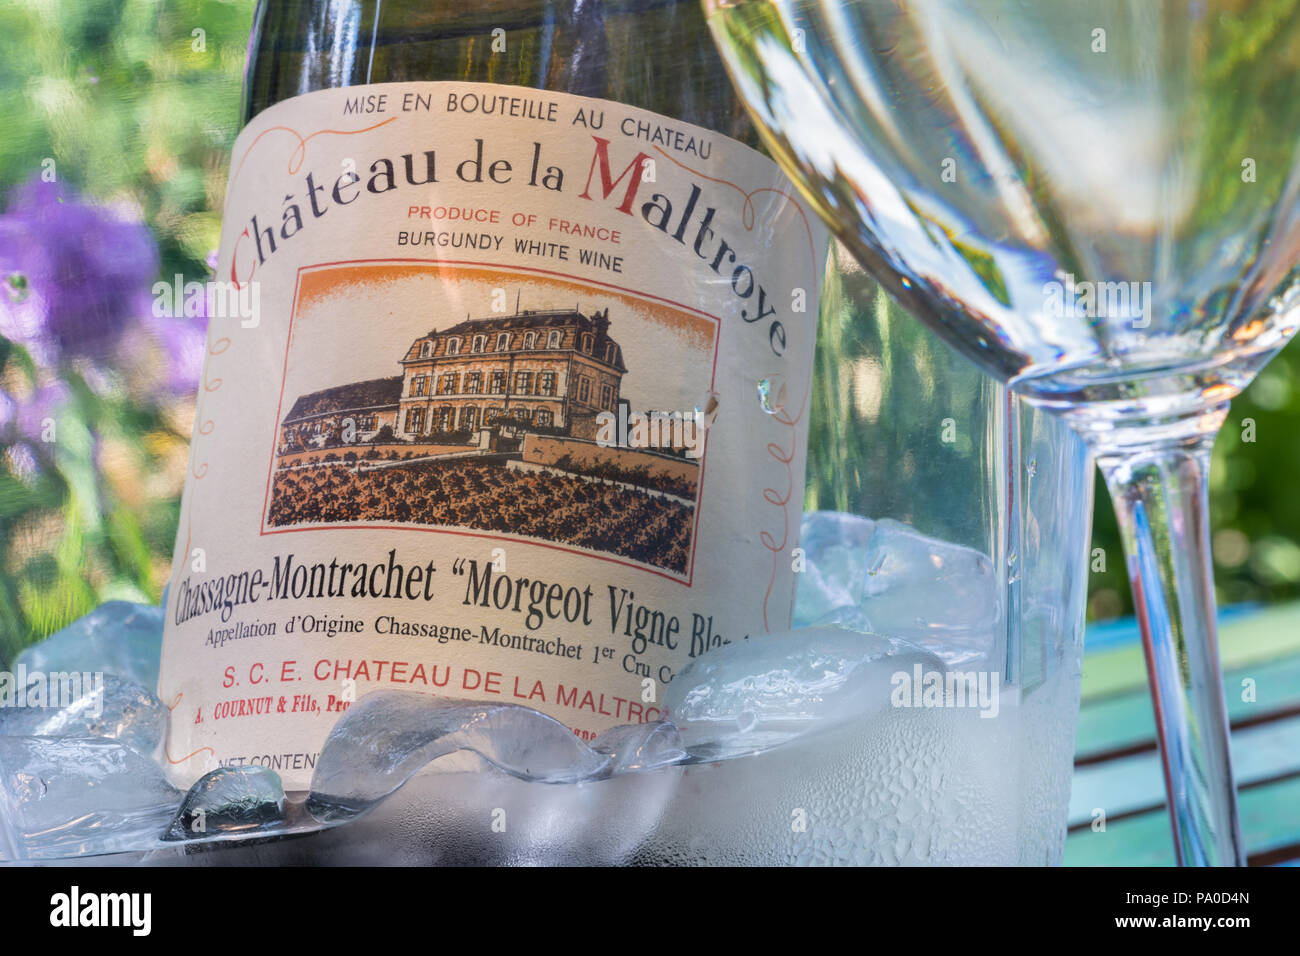 Chassagne-Montrachet Château de la Maltroye 1er cru white Burgundy wine bottle in ice bucket on sunny alfresco terrace table with wine glass France Stock Photo